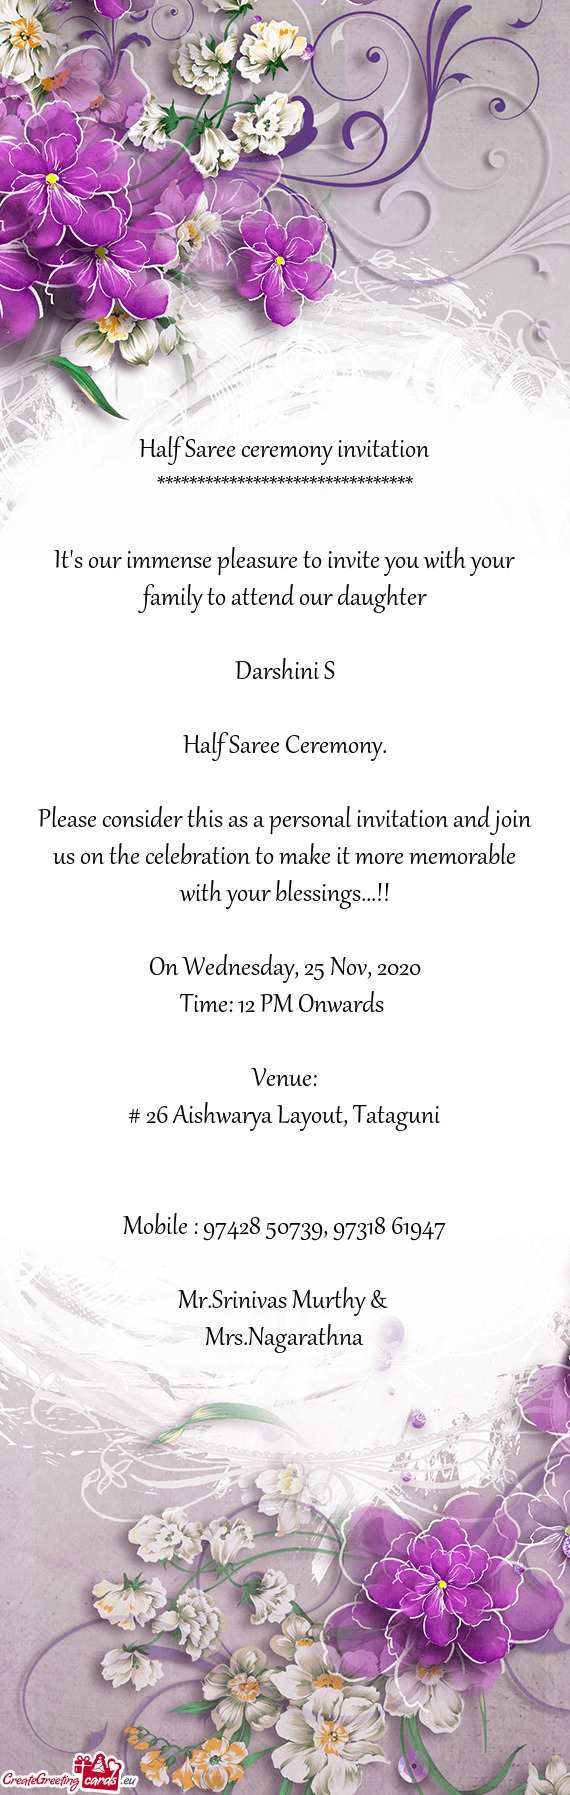 Half Saree Ceremony Invitation Free Cards